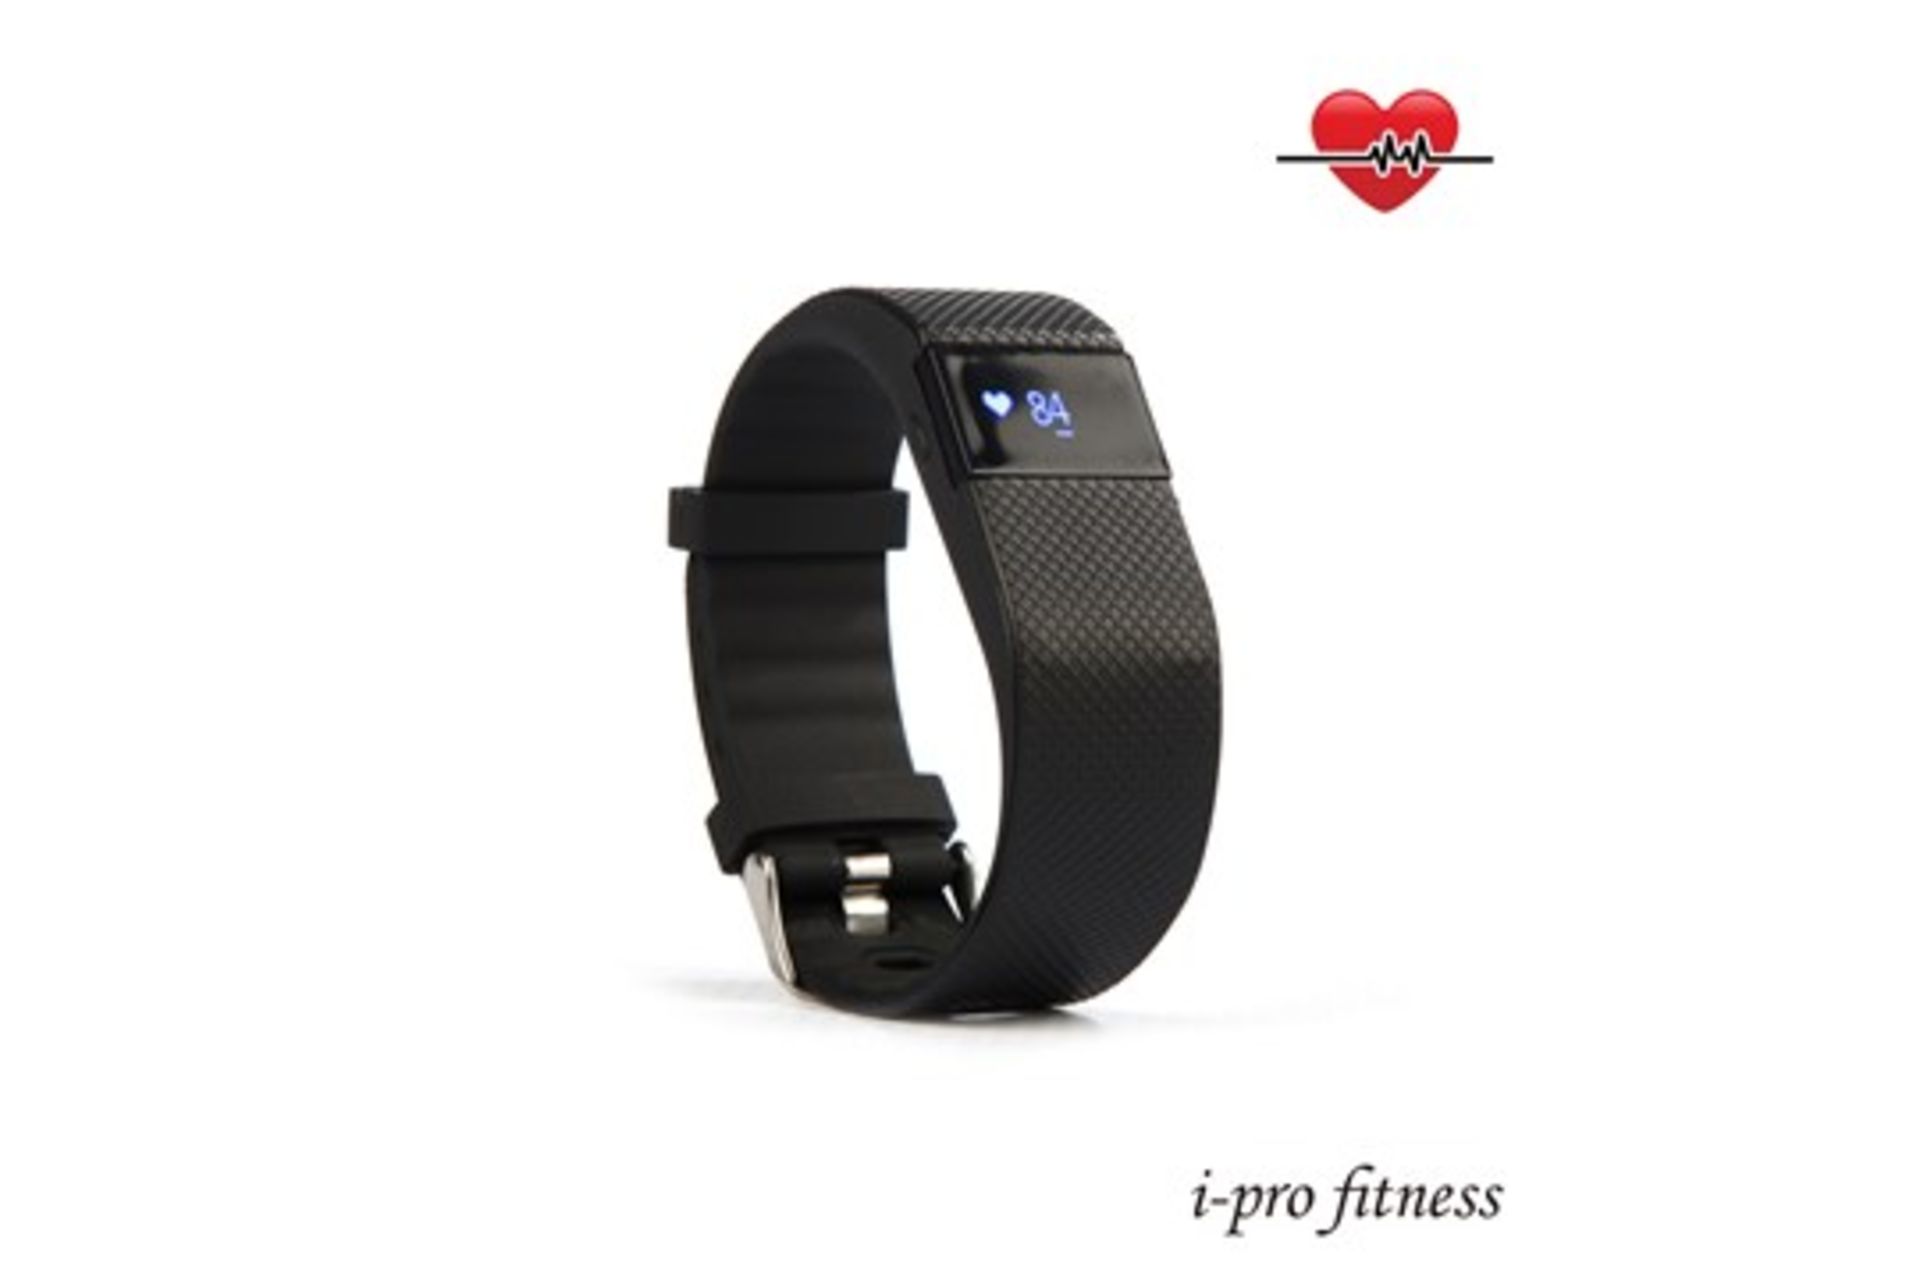 Trade Lot 50 X Units Fitness Tracker I-Pro Fitness, Bluetooth 4.0 Sports Smart Bracelet*** Fitness - Image 3 of 8